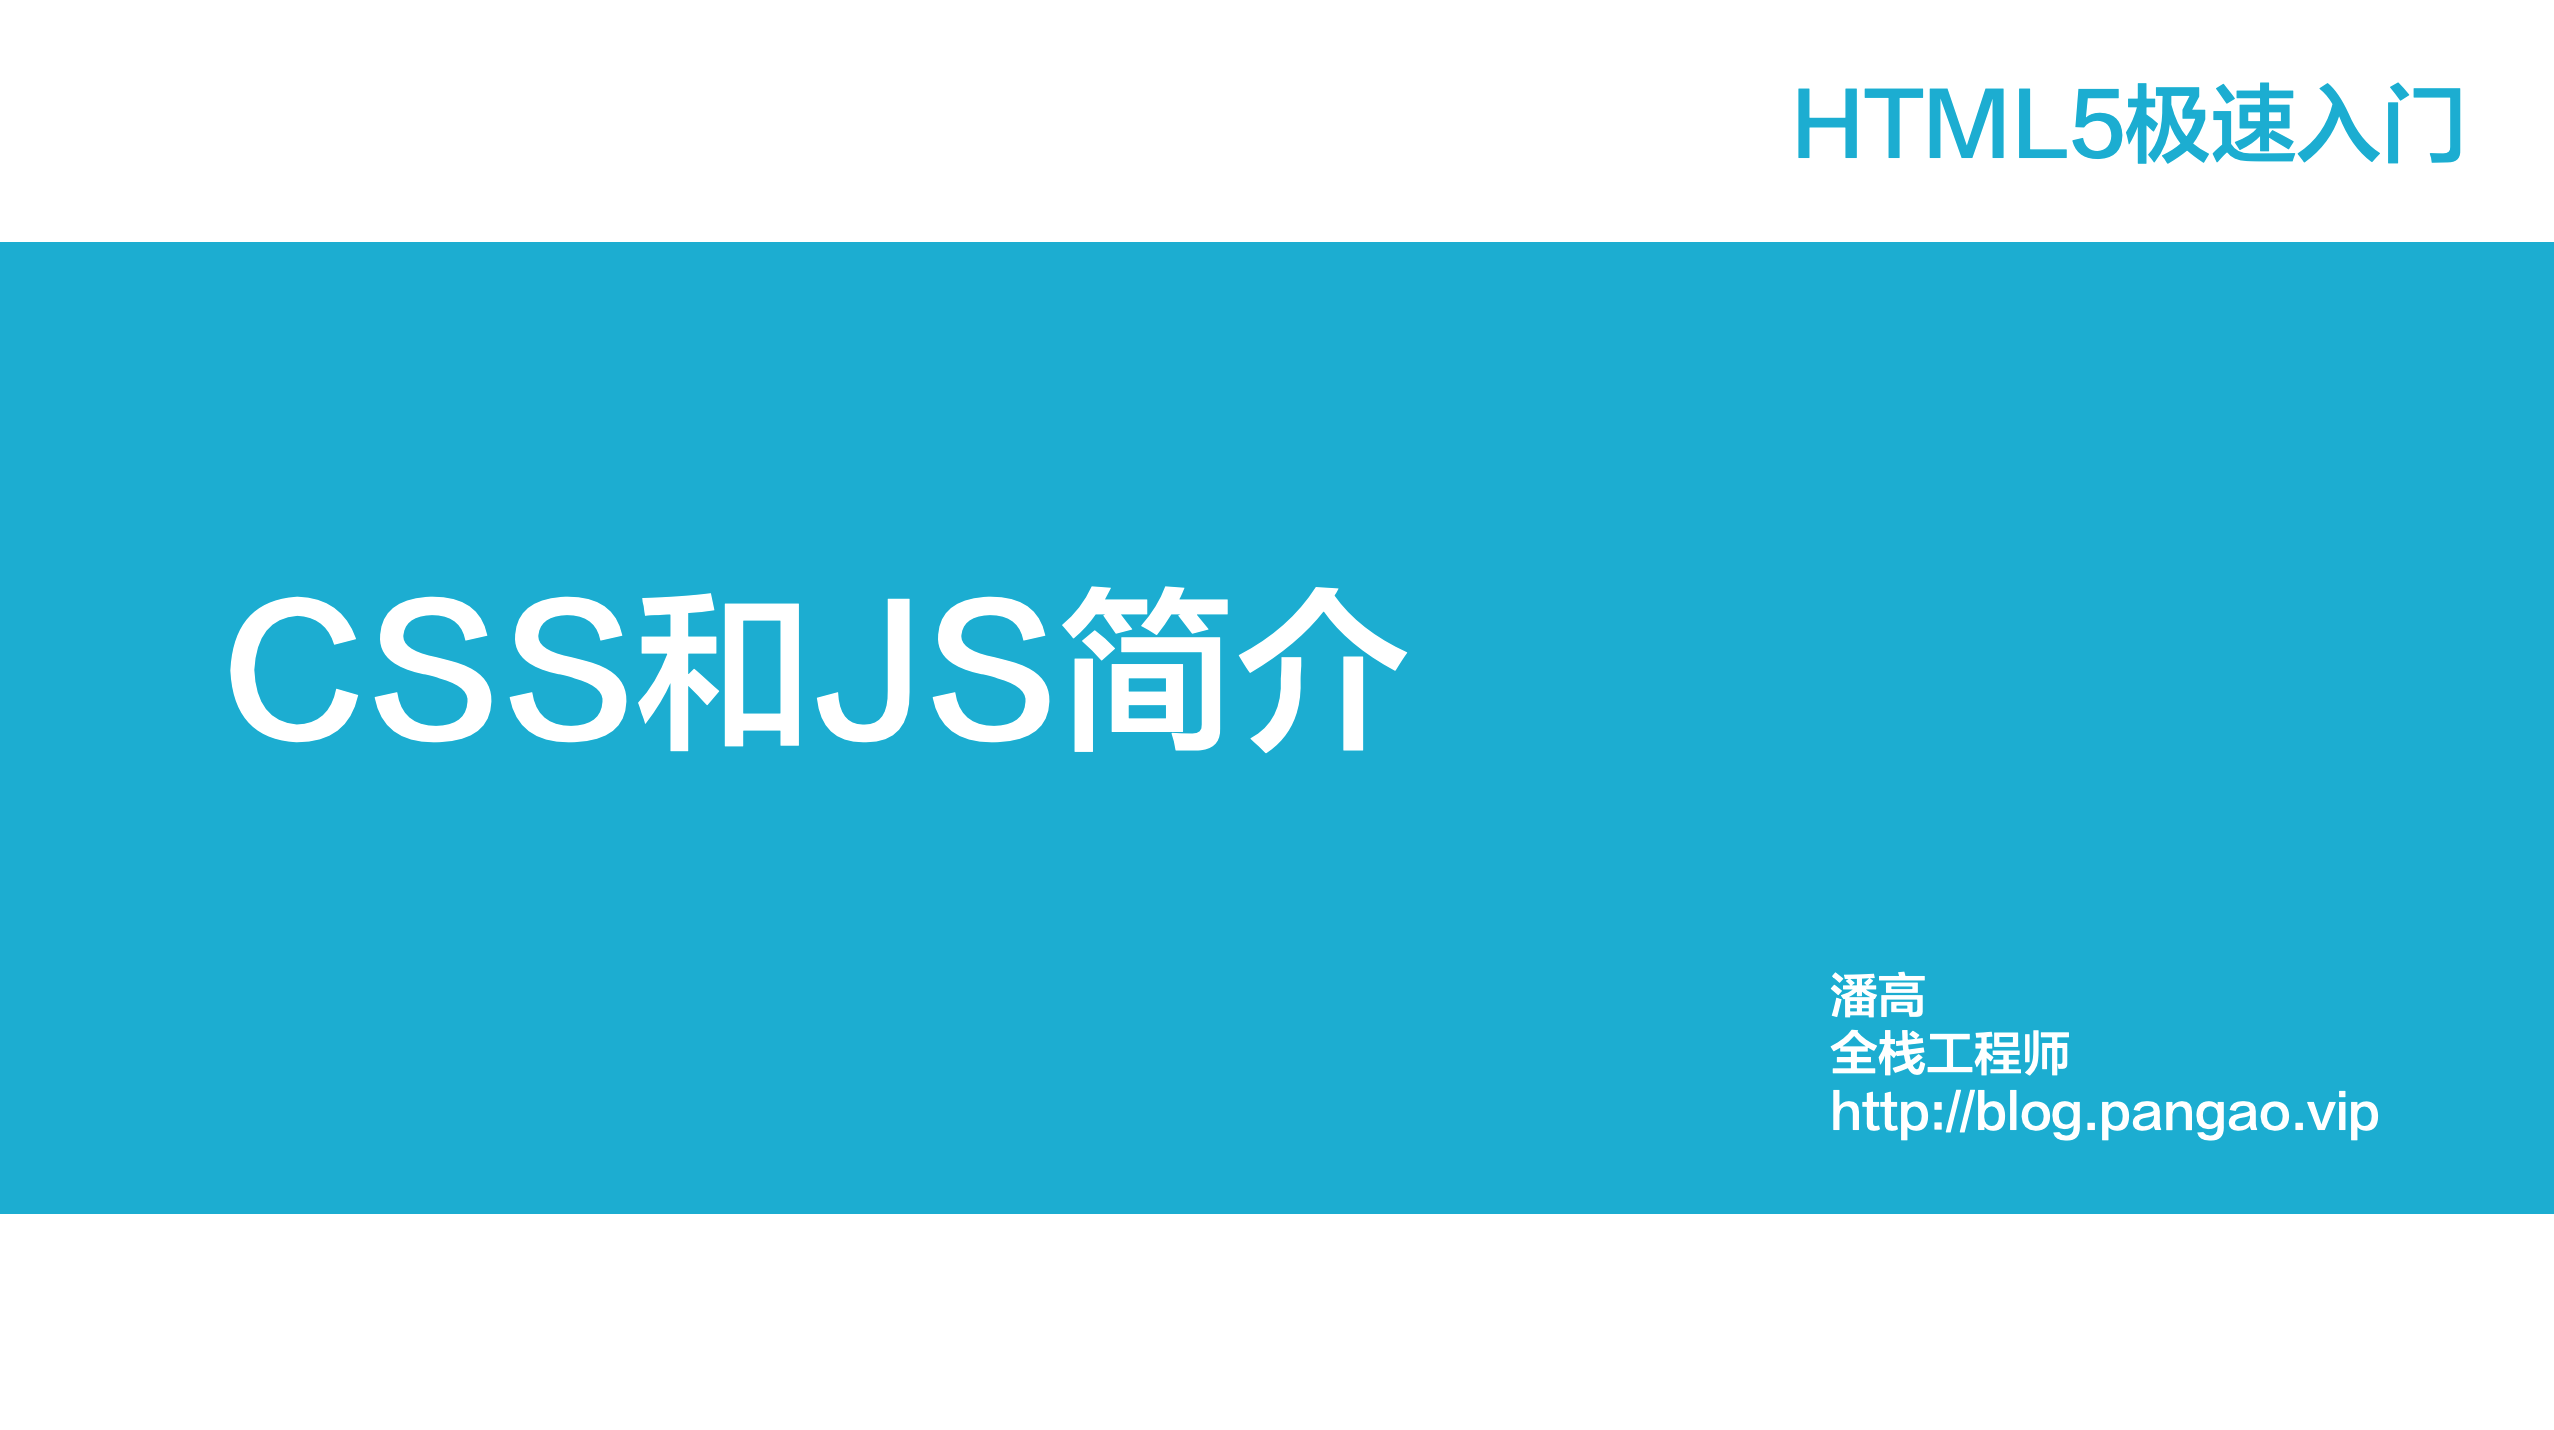 CSS和JS简介-HTML5极速入门